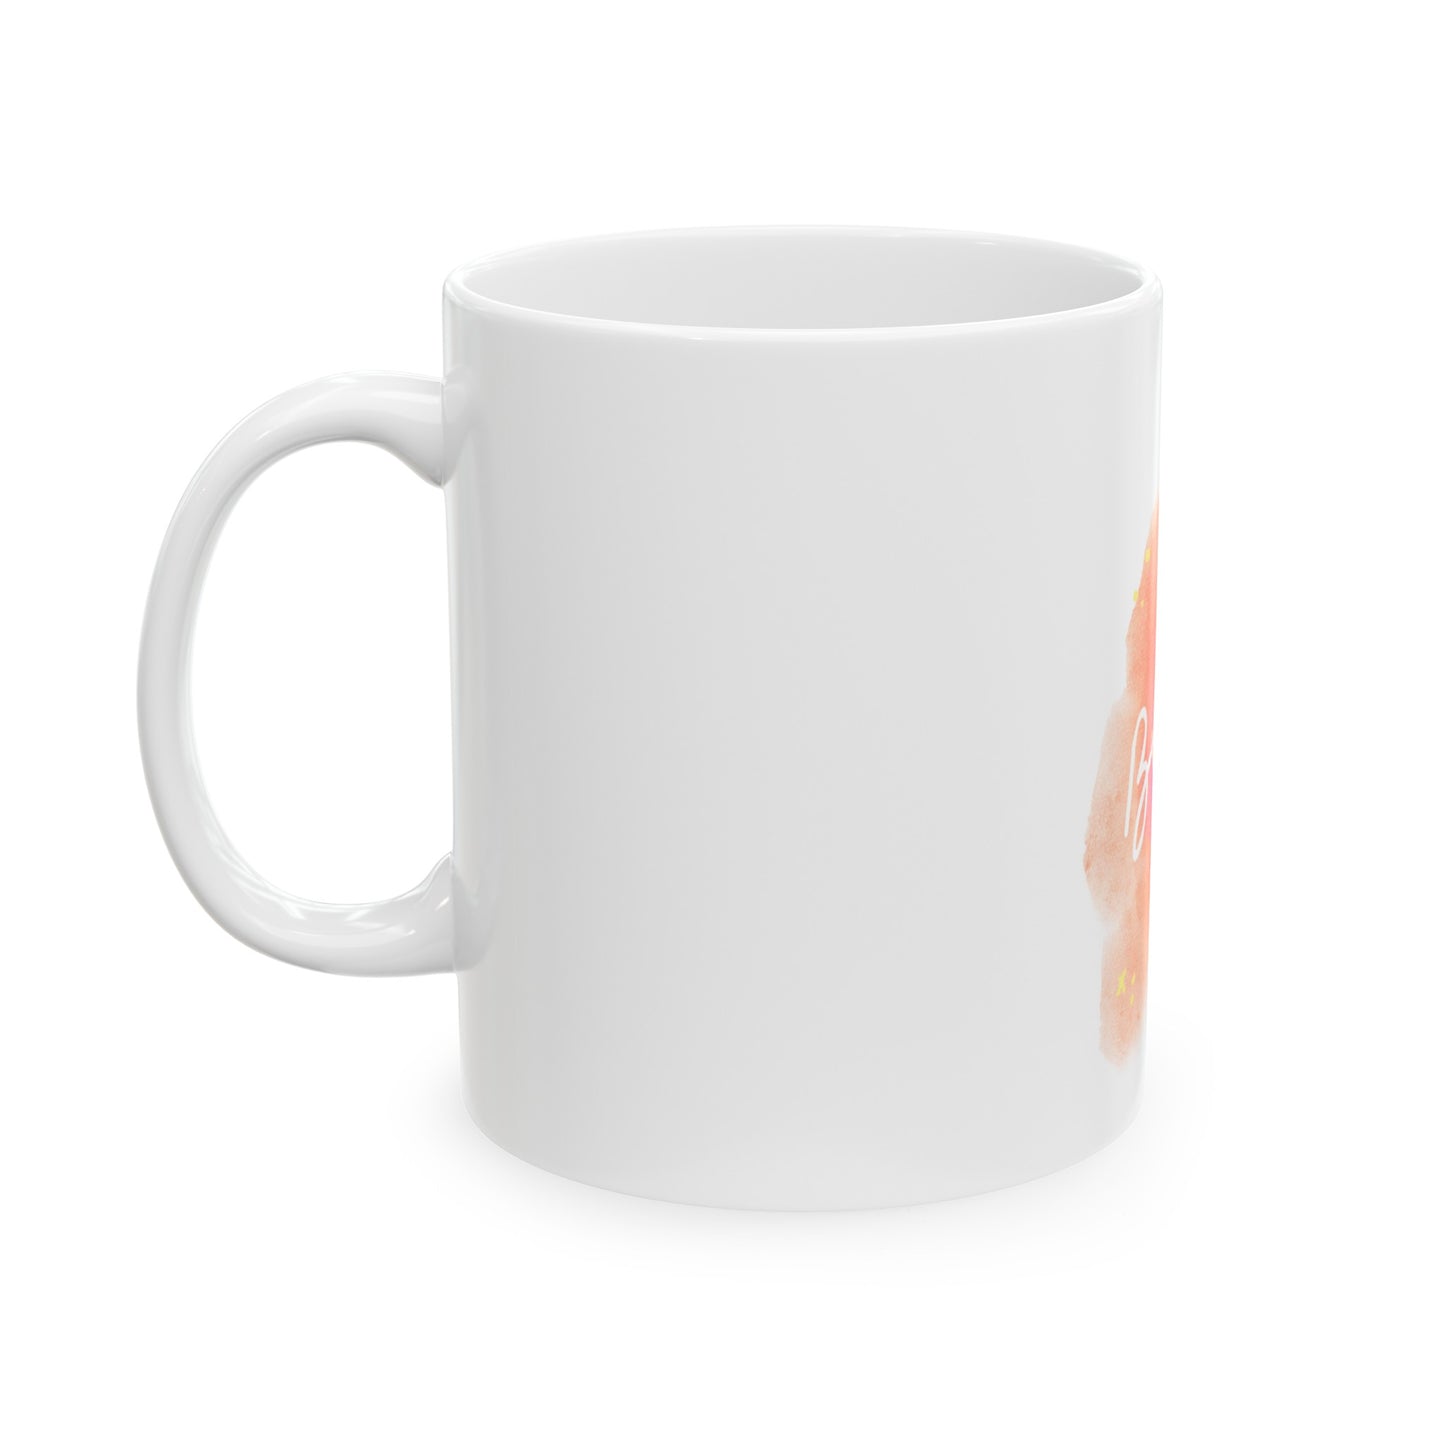 Blessed Ceramic Mug, 11oz